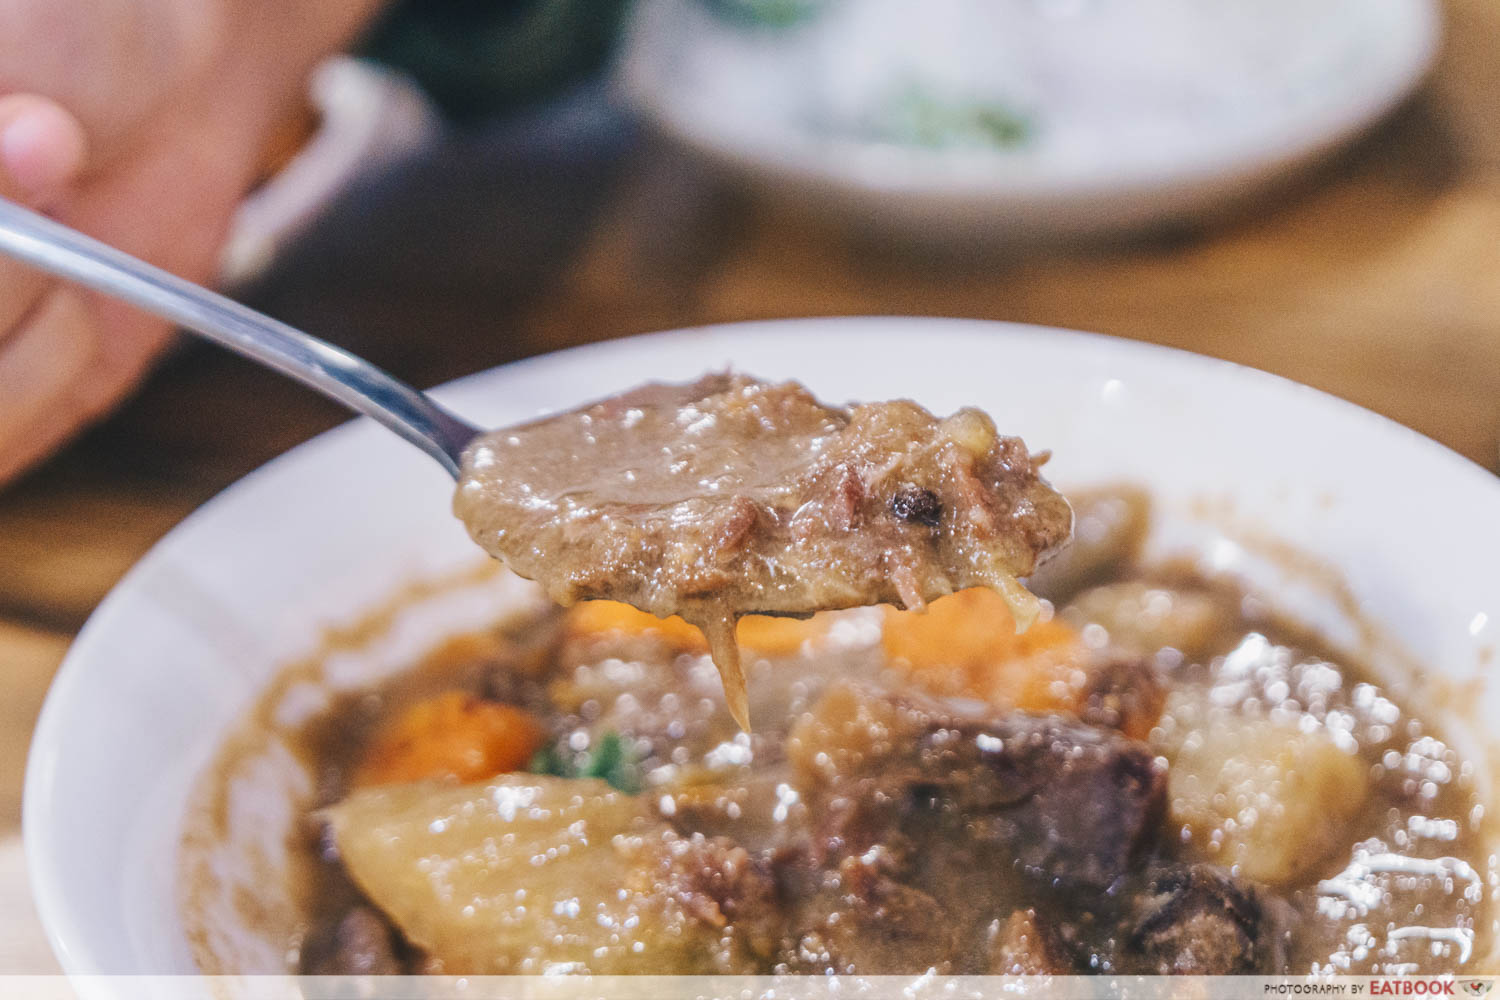 Chuan Ji Bakery Hainanese Delicacies - Beef stew interaction